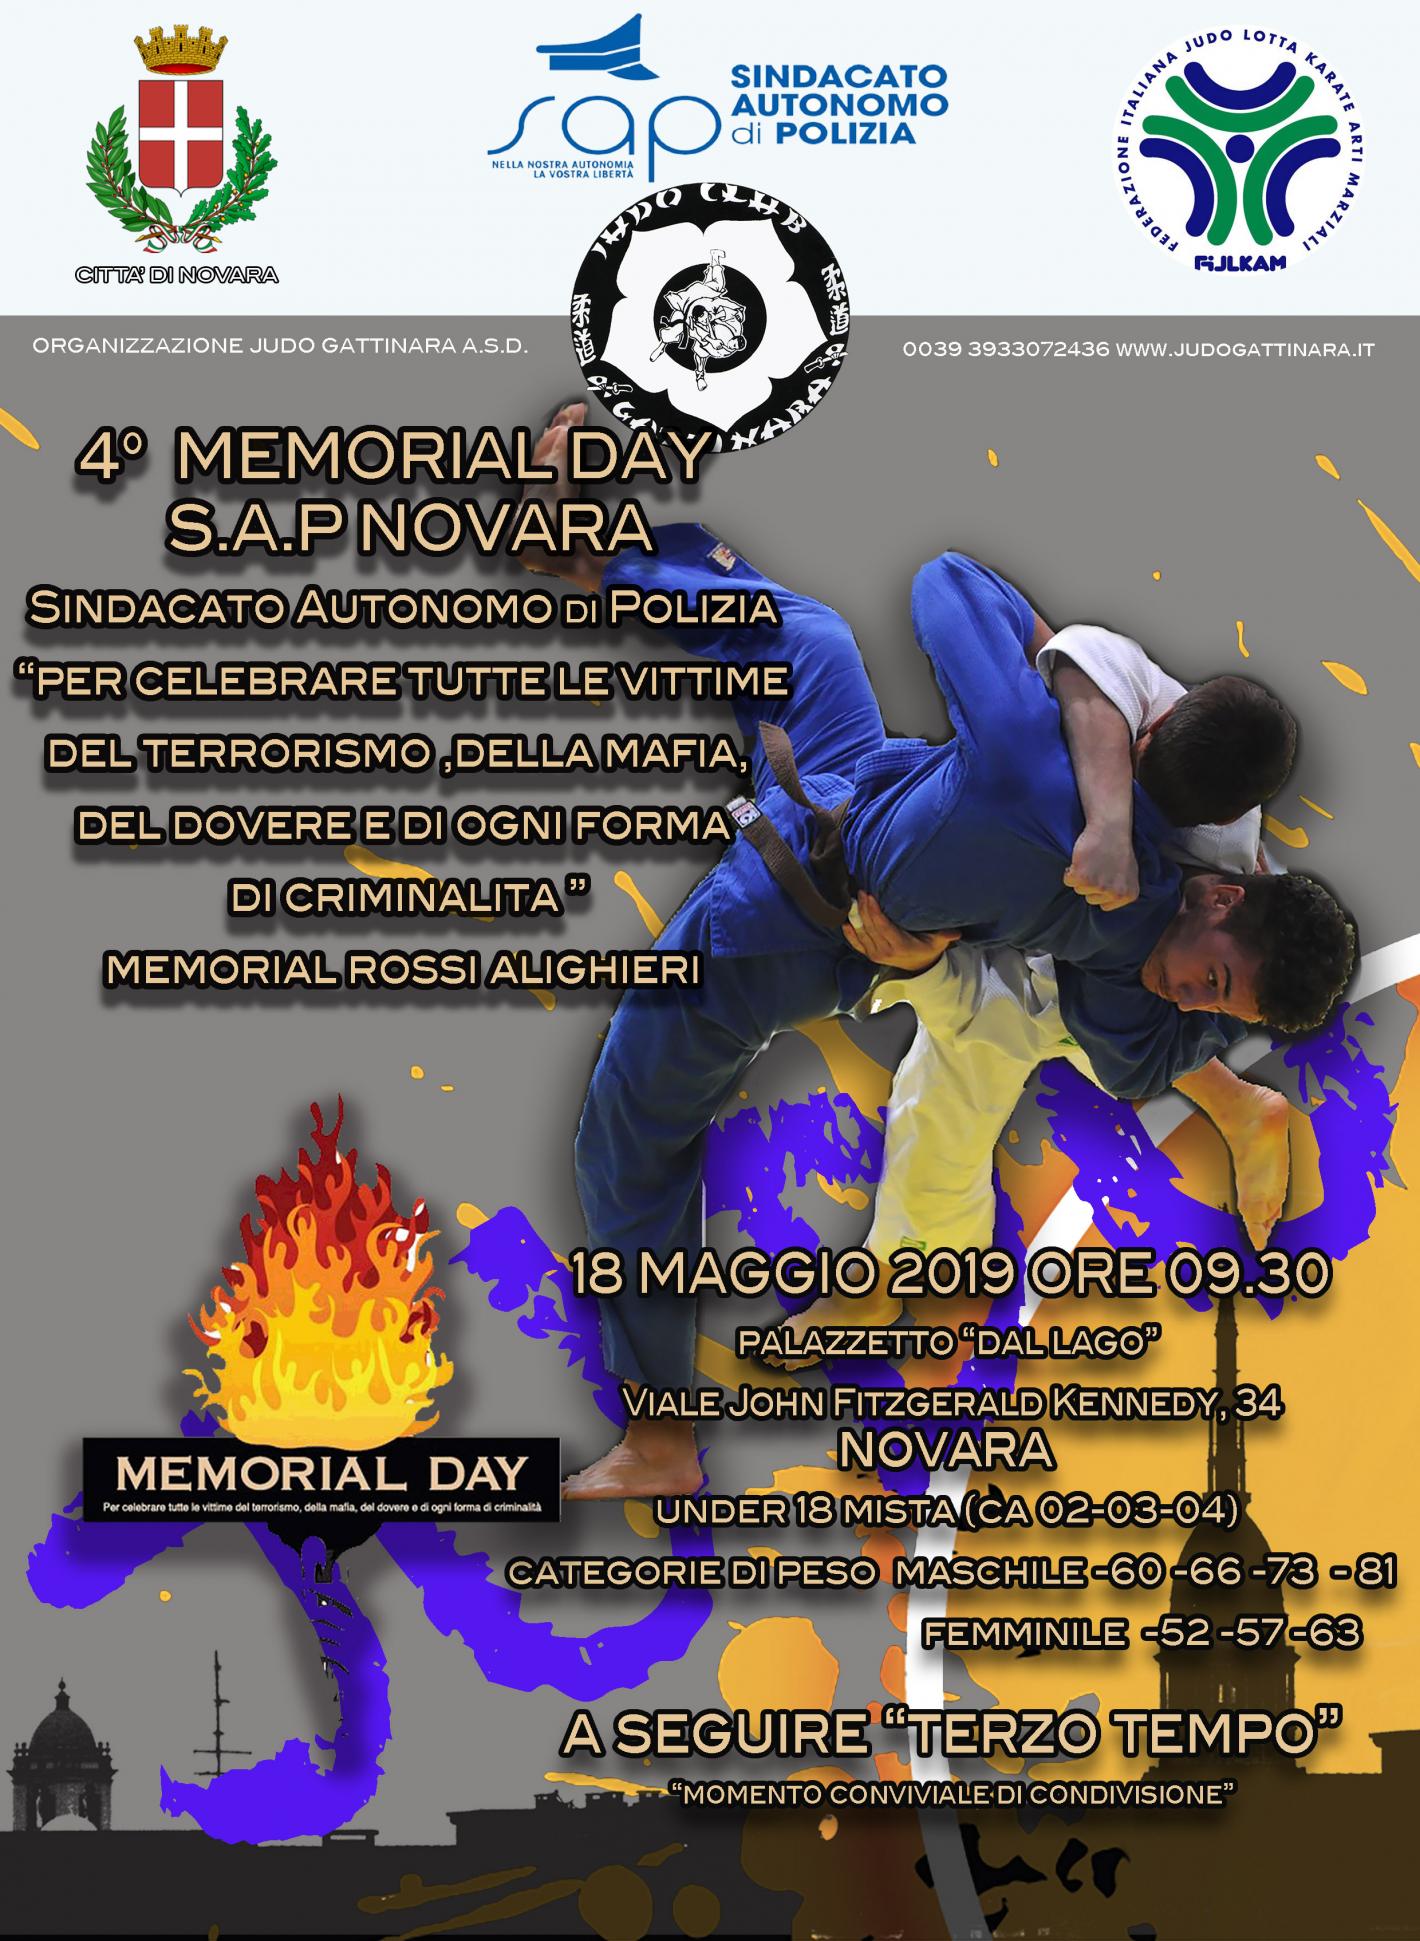 images/veneto/Judo/Gallery_Judo_2019/medium/LOCANDINA_MEMORIAL_DAY_2019_2.jpg